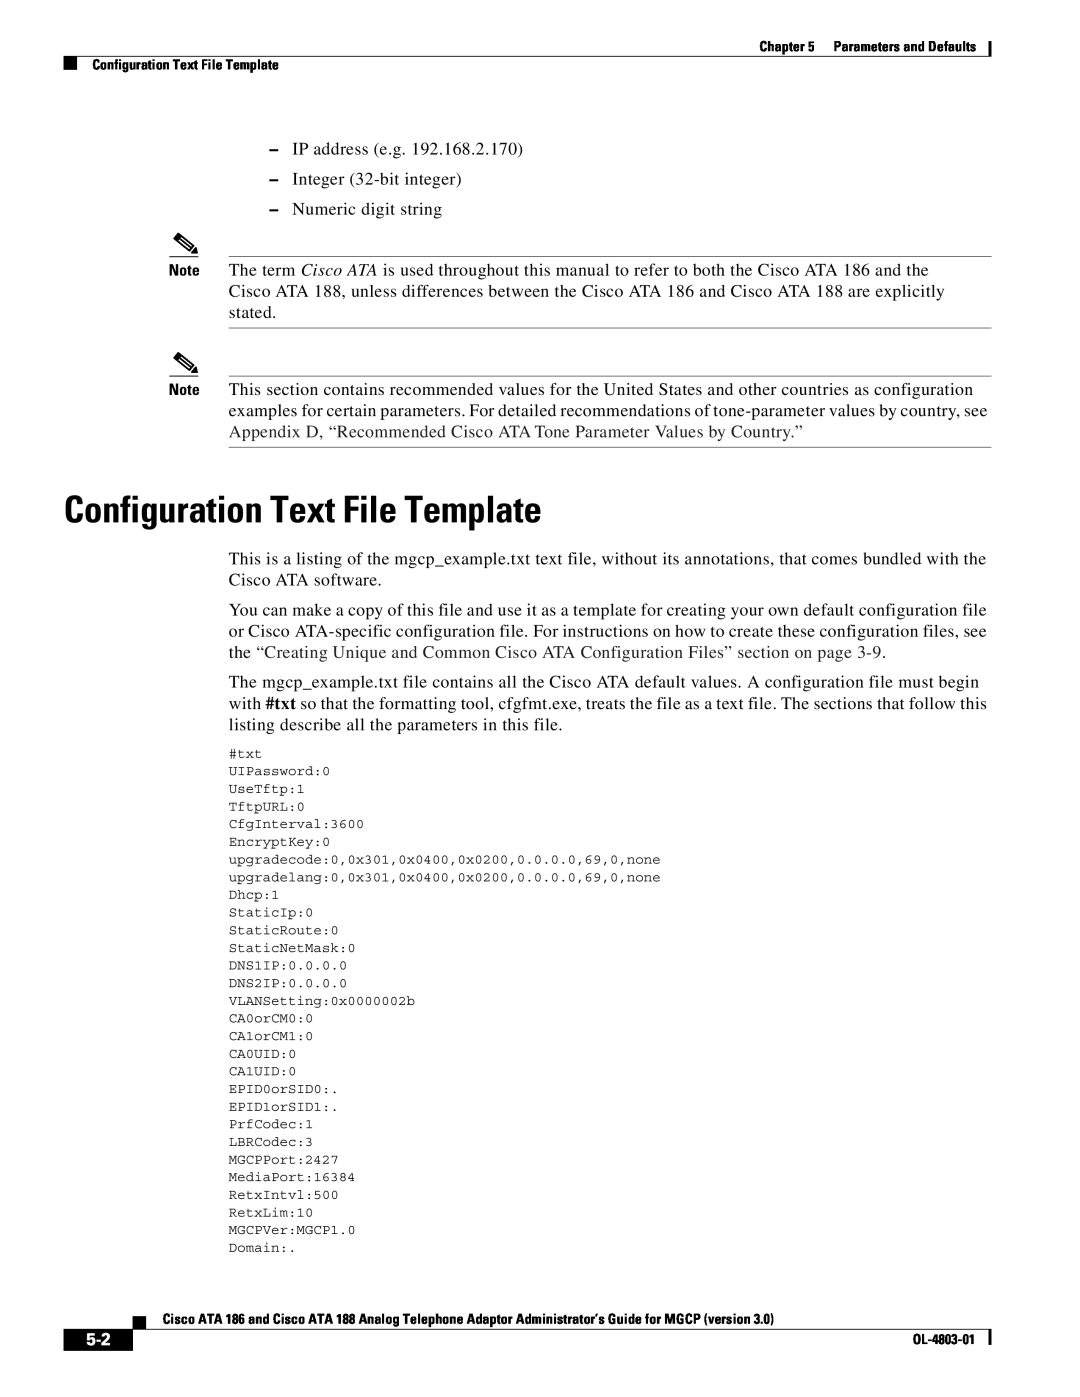 Cisco Systems ATA 186 Configuration Text File Template, #txt UIPassword0 UseTftp1 TftpURL0 CfgInterval3600 EncryptKey0 